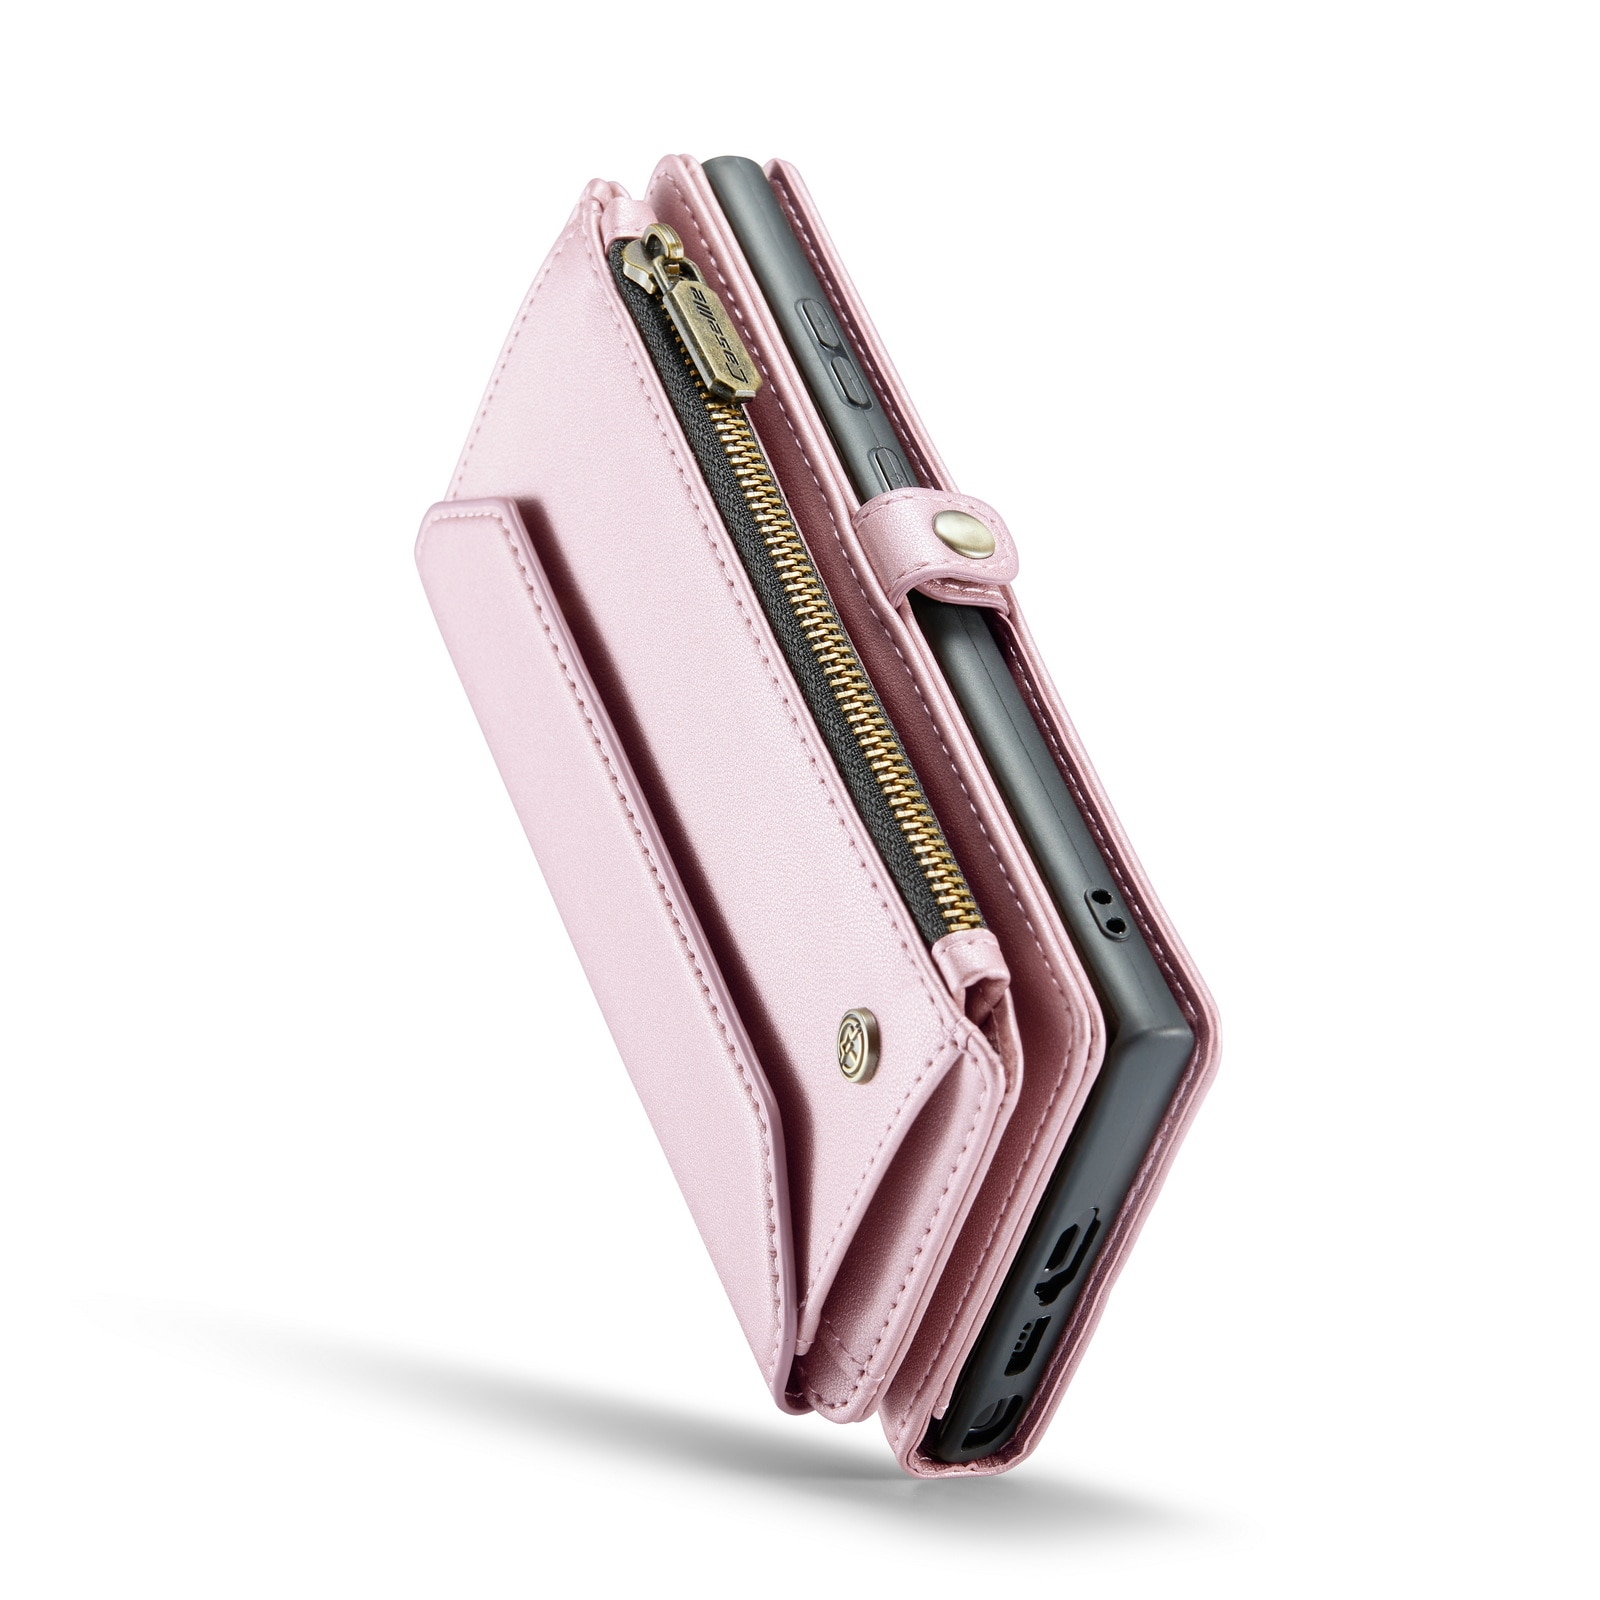 Brieftasche Hülle Samsung Galaxy S23 Ultra rosa